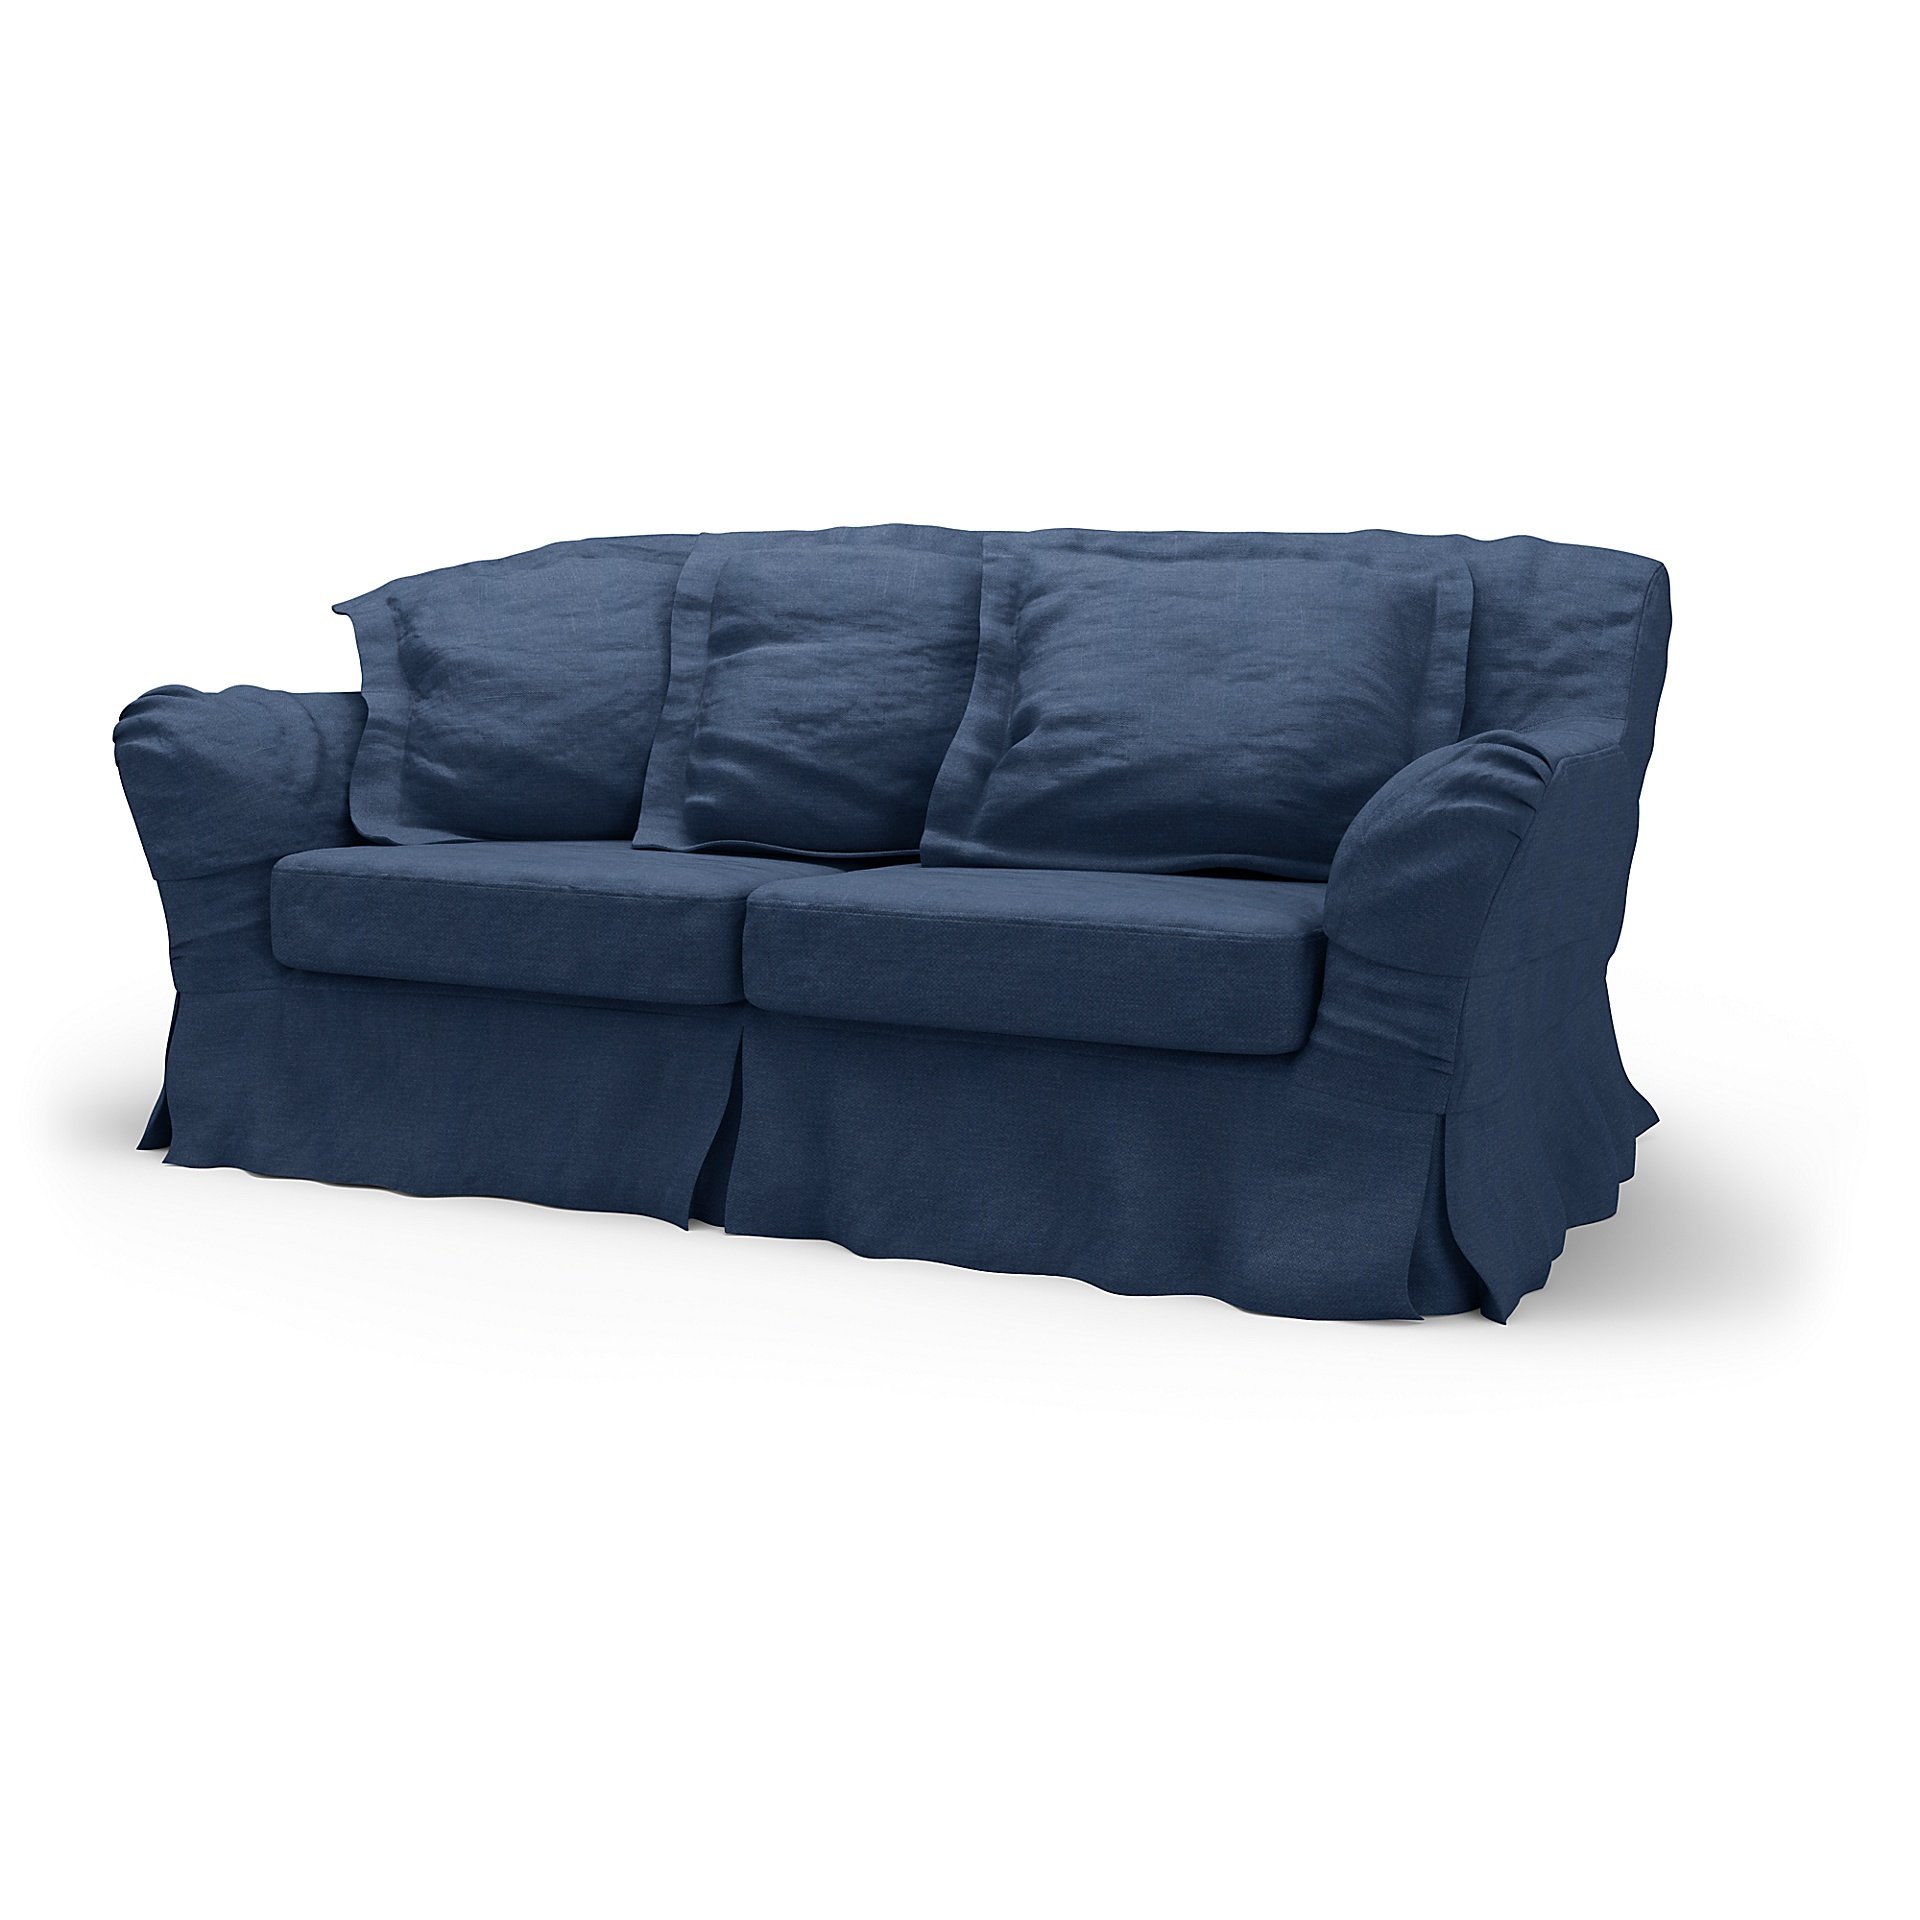 IKEA - Tomelilla 2 Seater Sofa Cover, Navy Blue, Linen - Bemz